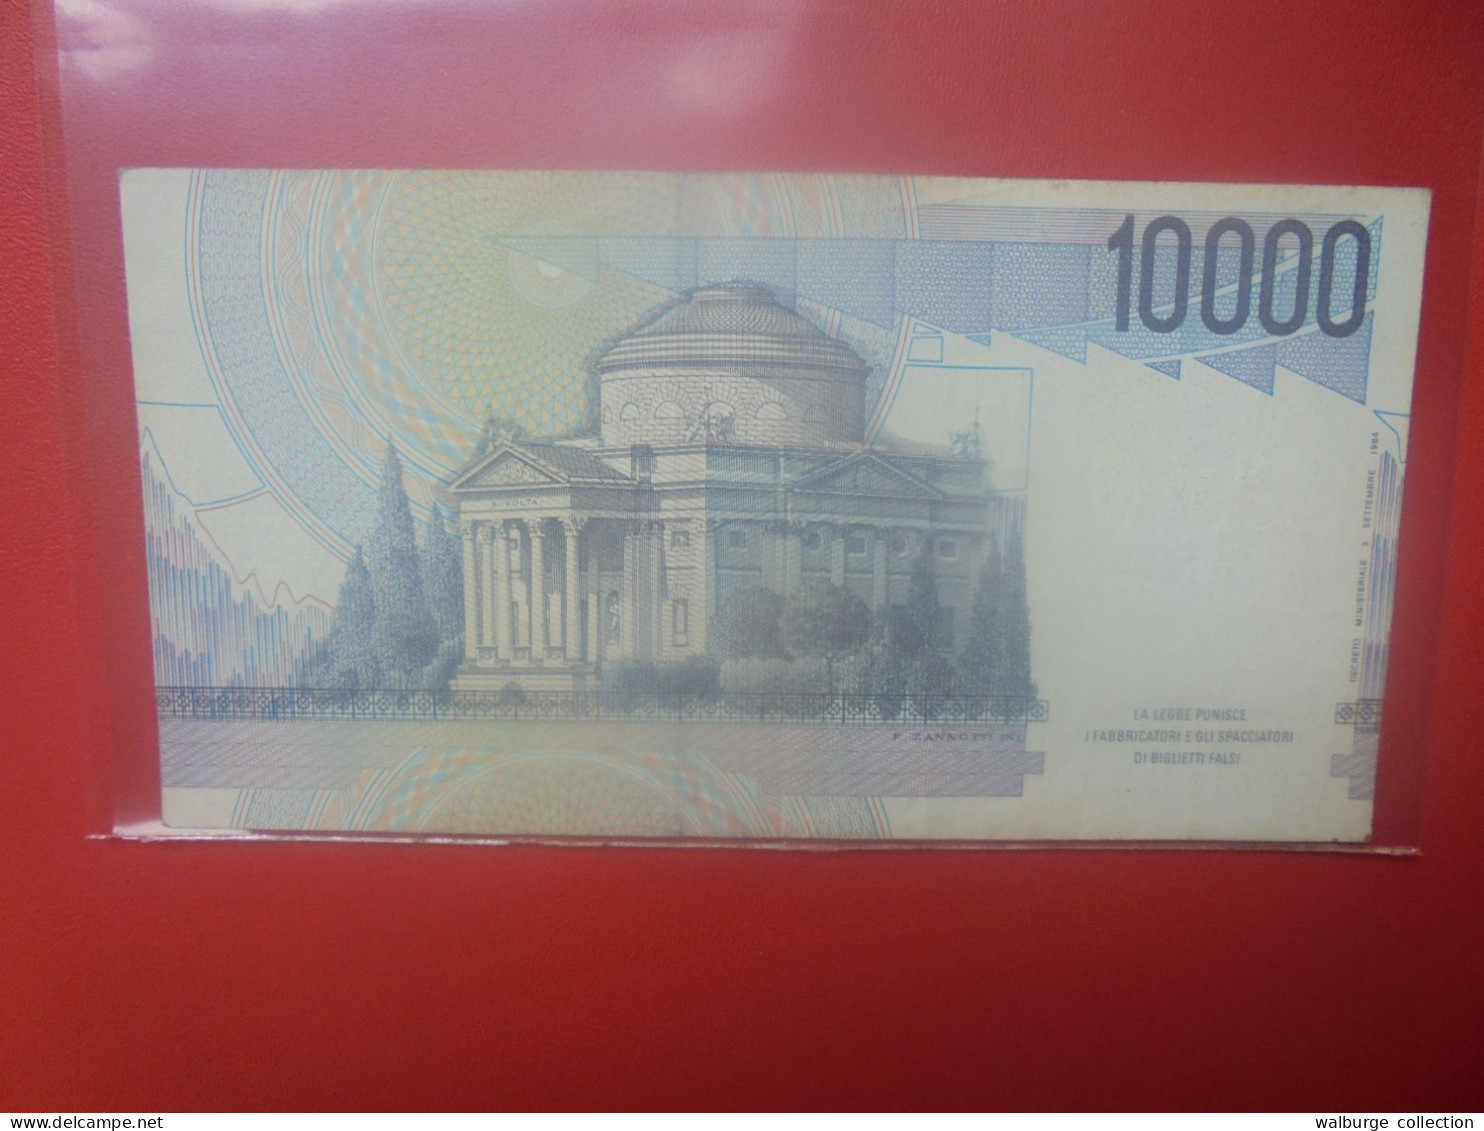 ITALIE 10.000 LIRE 1984 Circuler (B.33) - 10.000 Lire